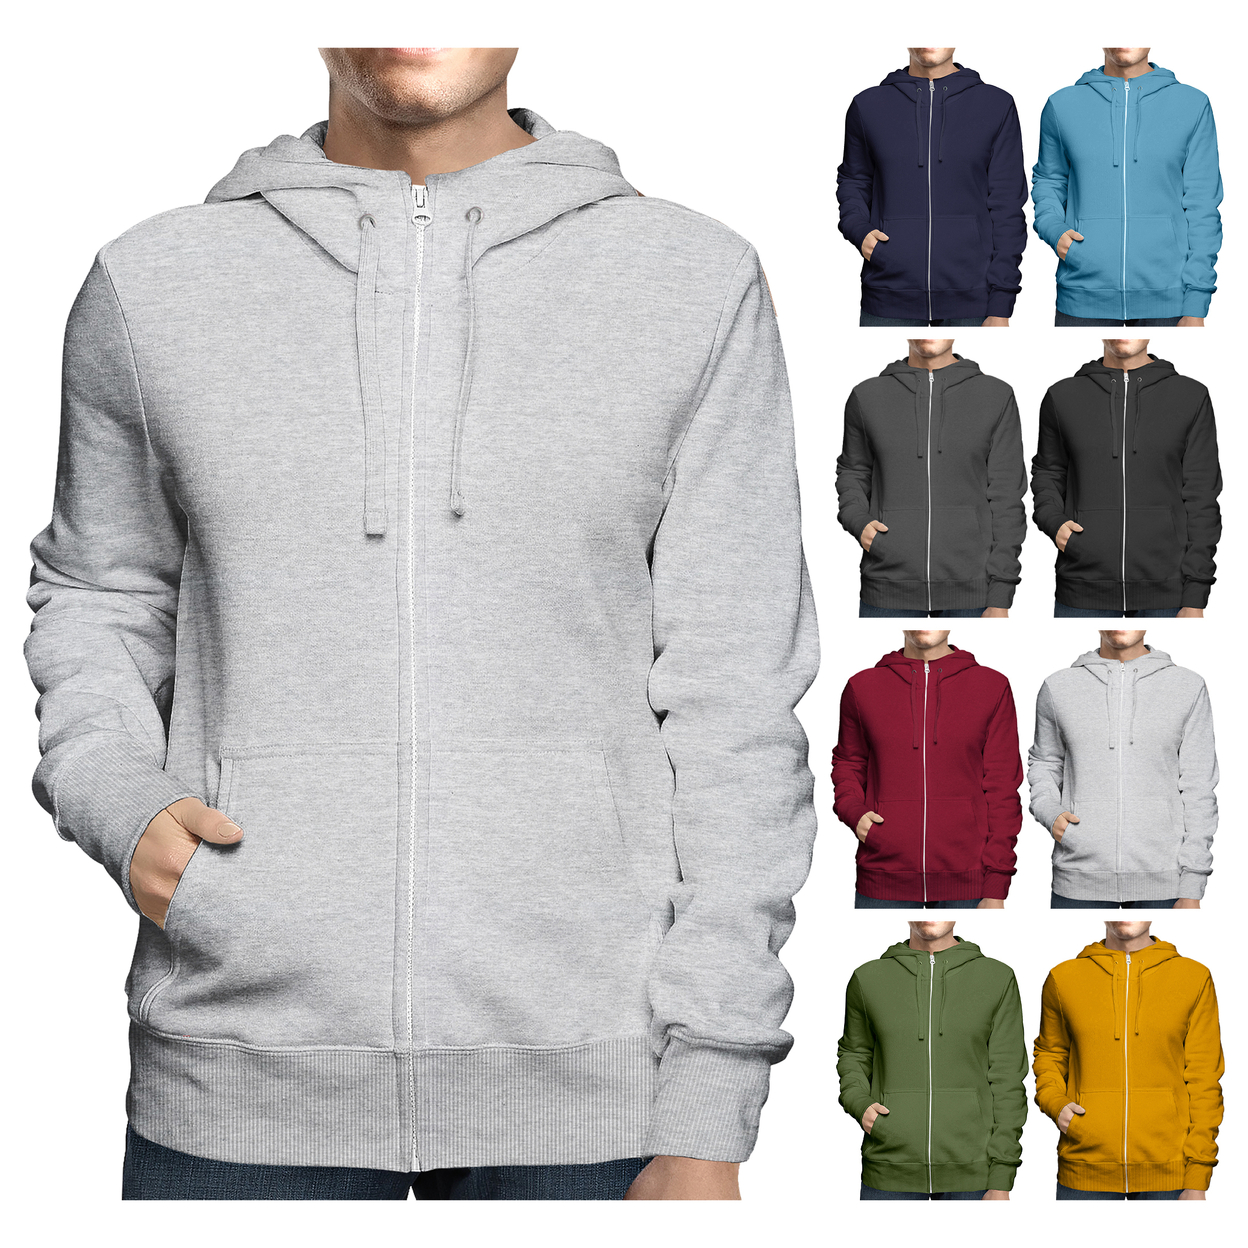 2-Pack: Men's Winter Warm Soft Full Zip-Up Fleece Lined Hoodie Sweatshirt - Black & Black, Xx-large